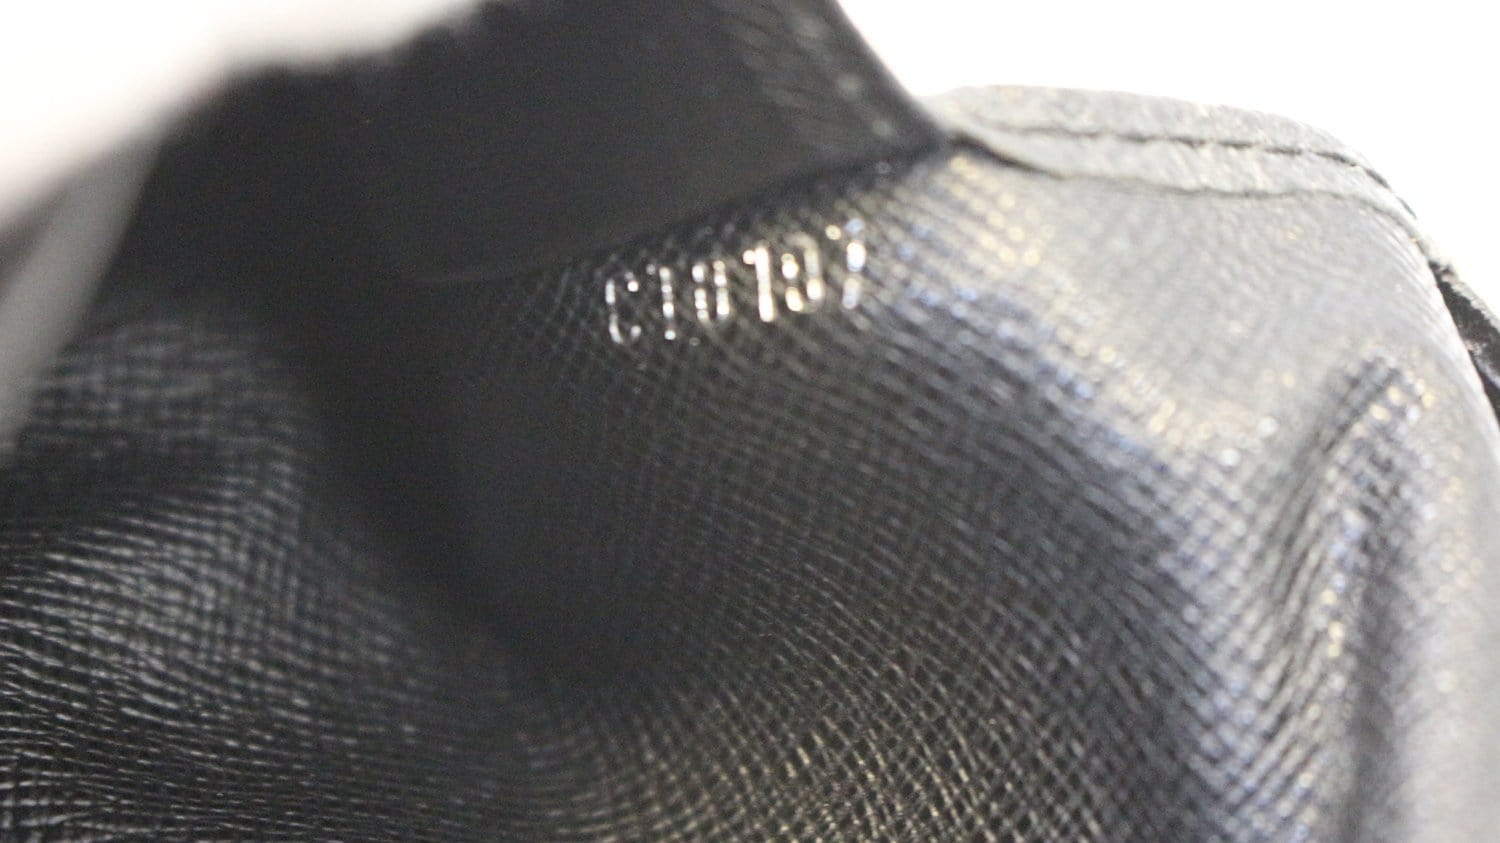 Louis Vuitton Vintage taiga leather wallet